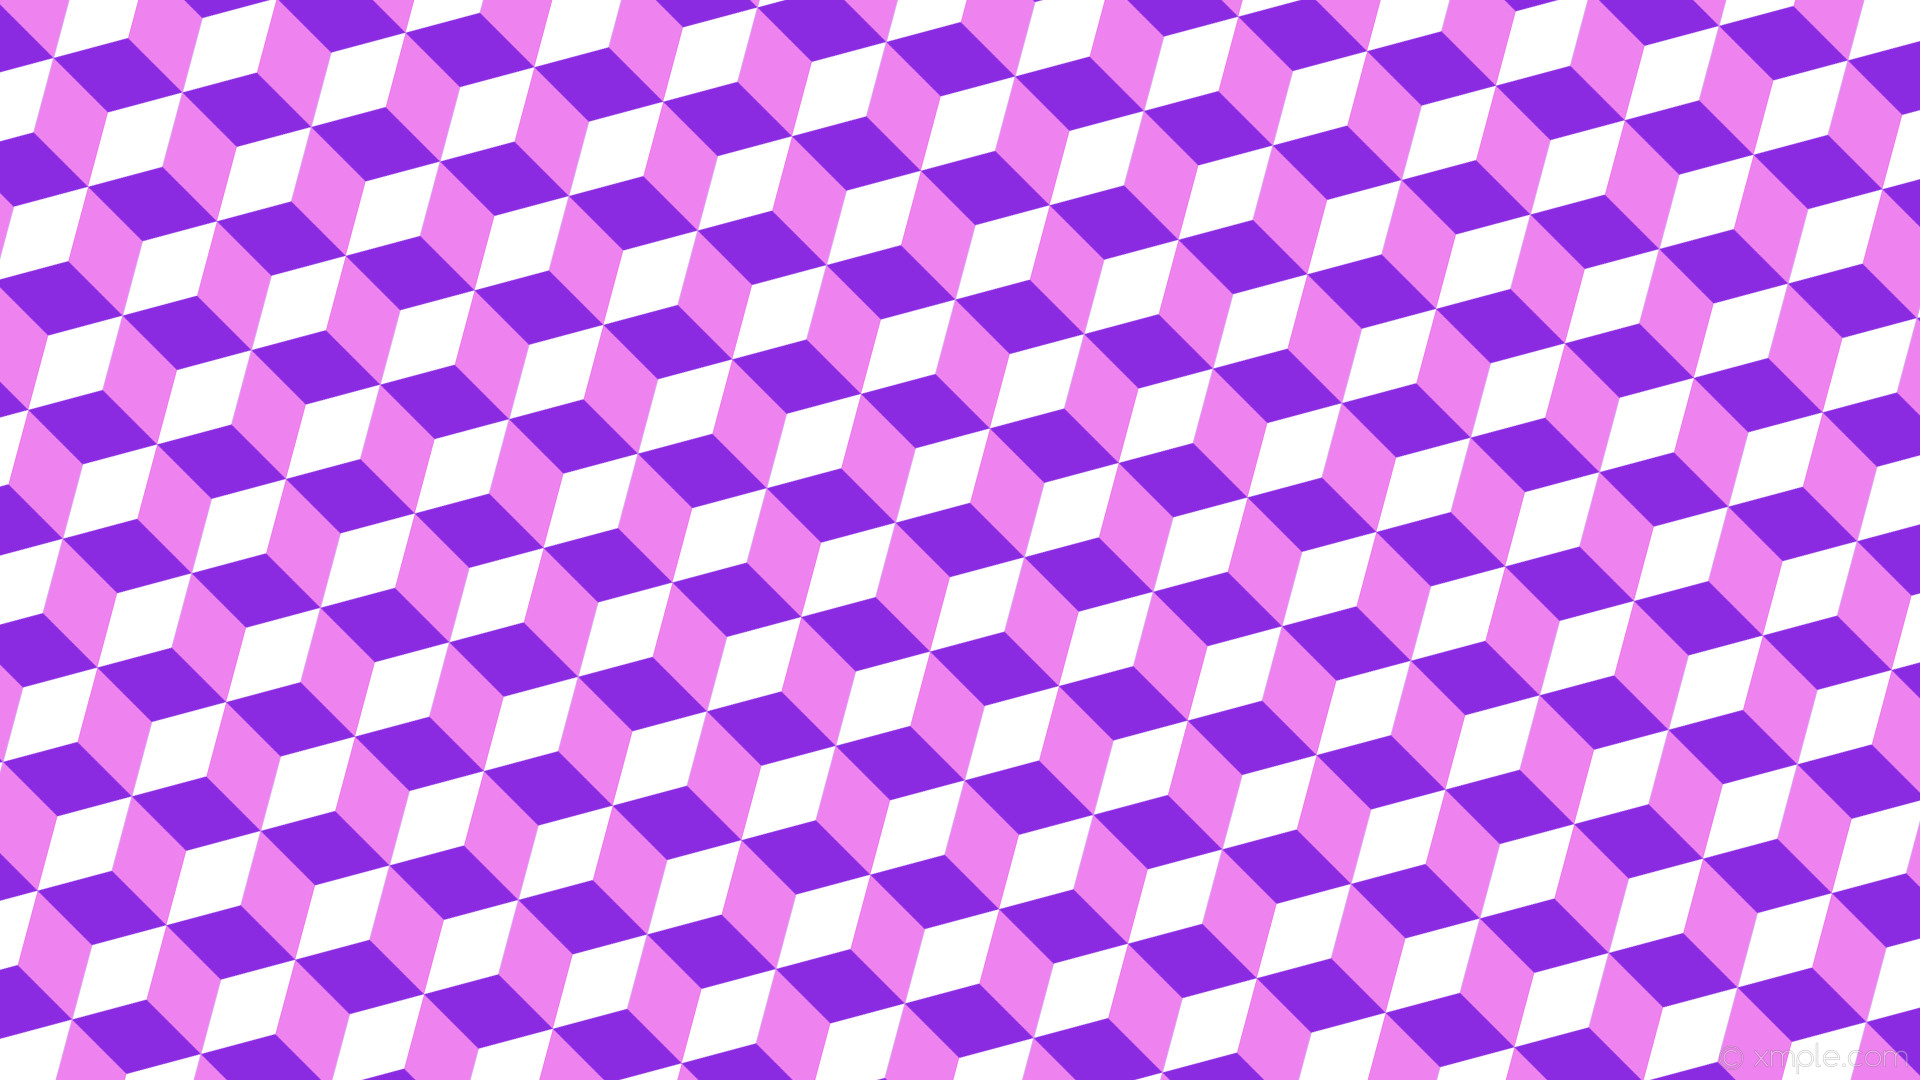 1920x1080 wallpaper purple white 3d cubes blue violet violet #8a2be2 #ee82ee #ffffff  165Â°